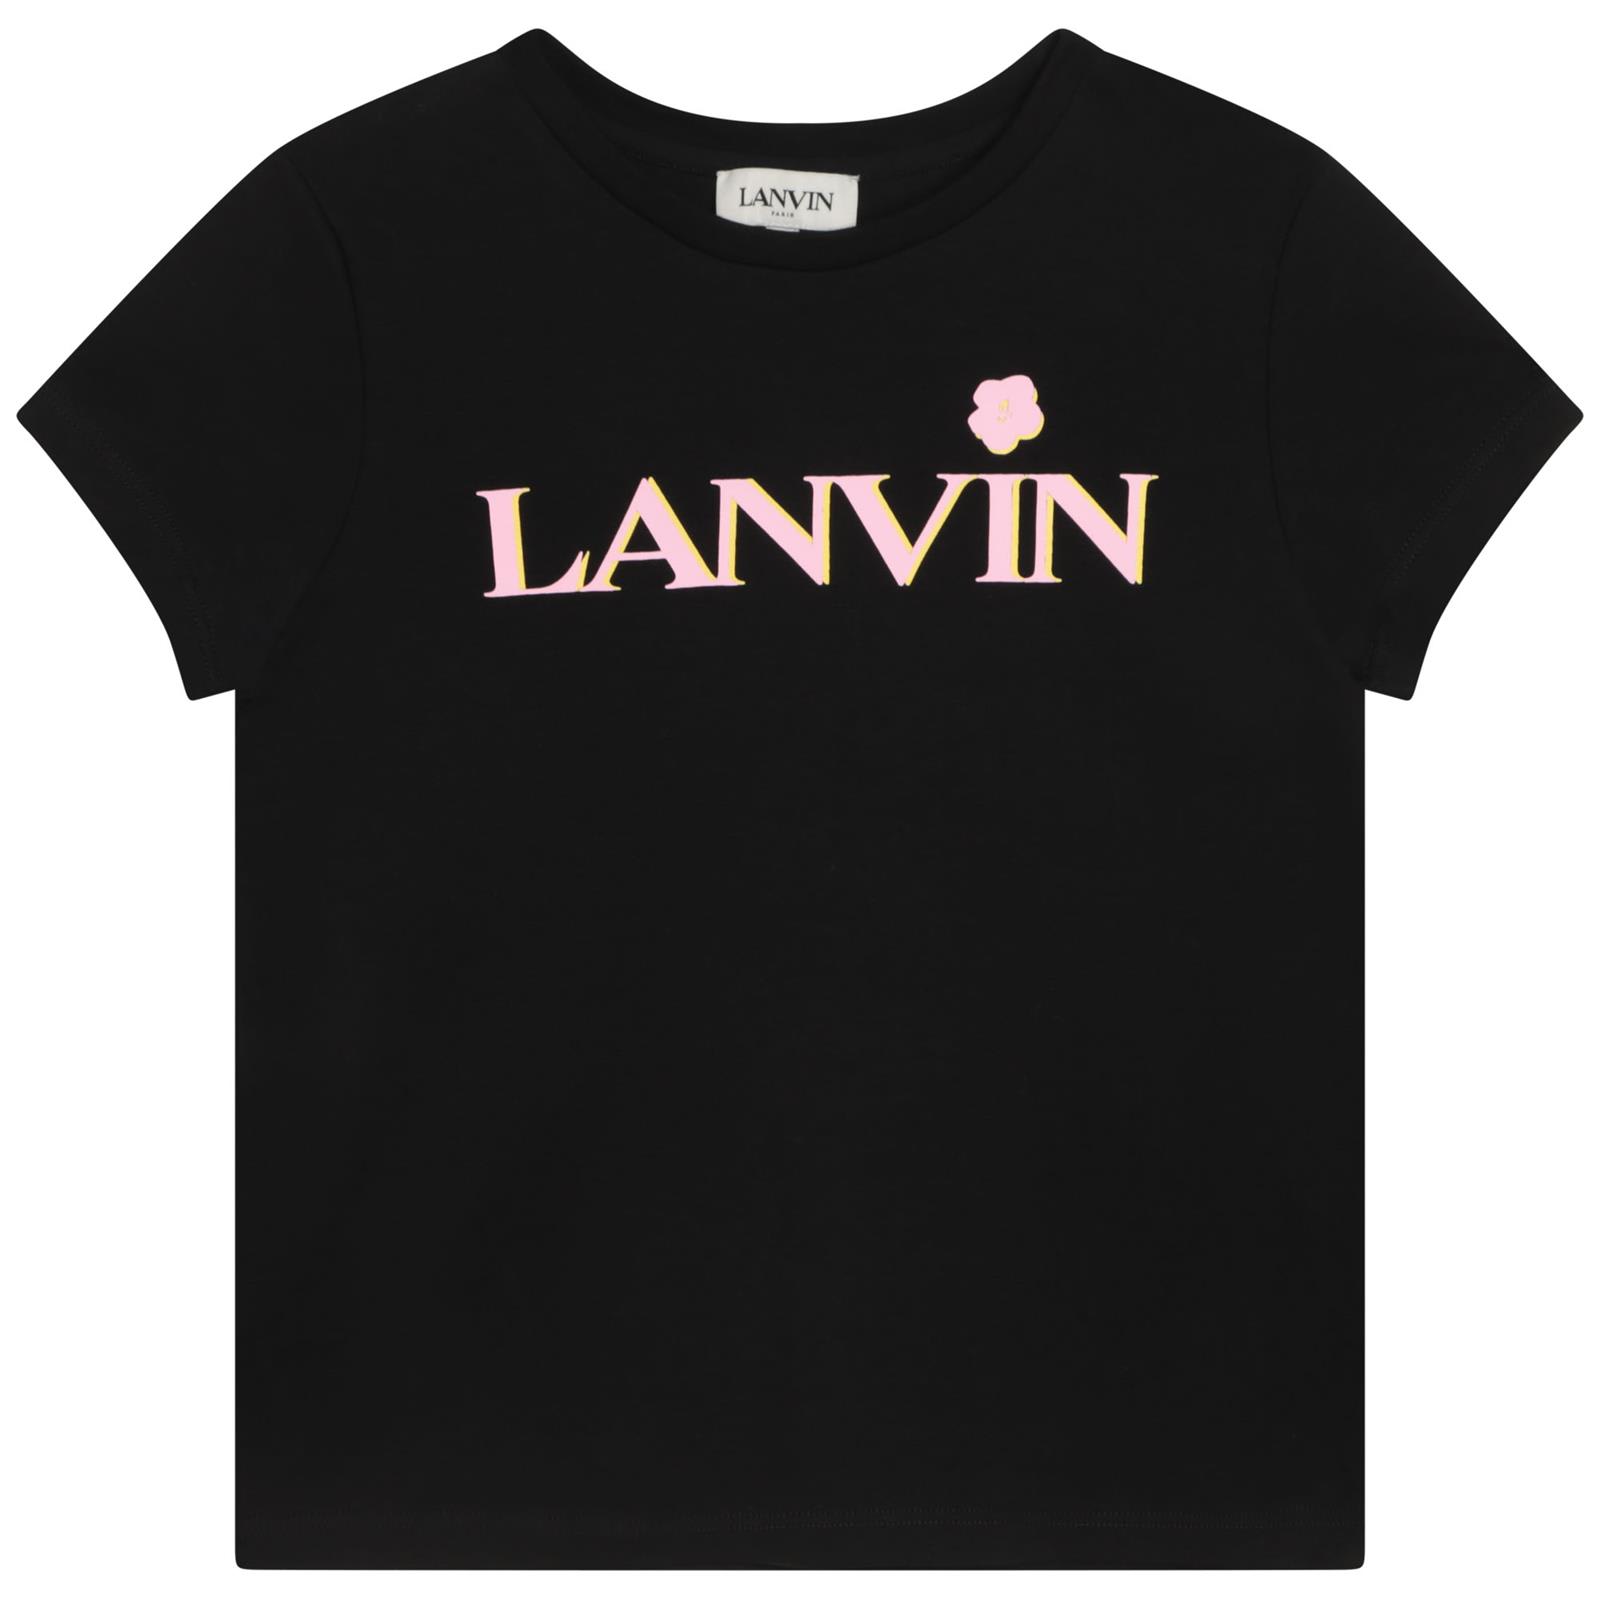 LANVIN PRINTED T-SHIRT